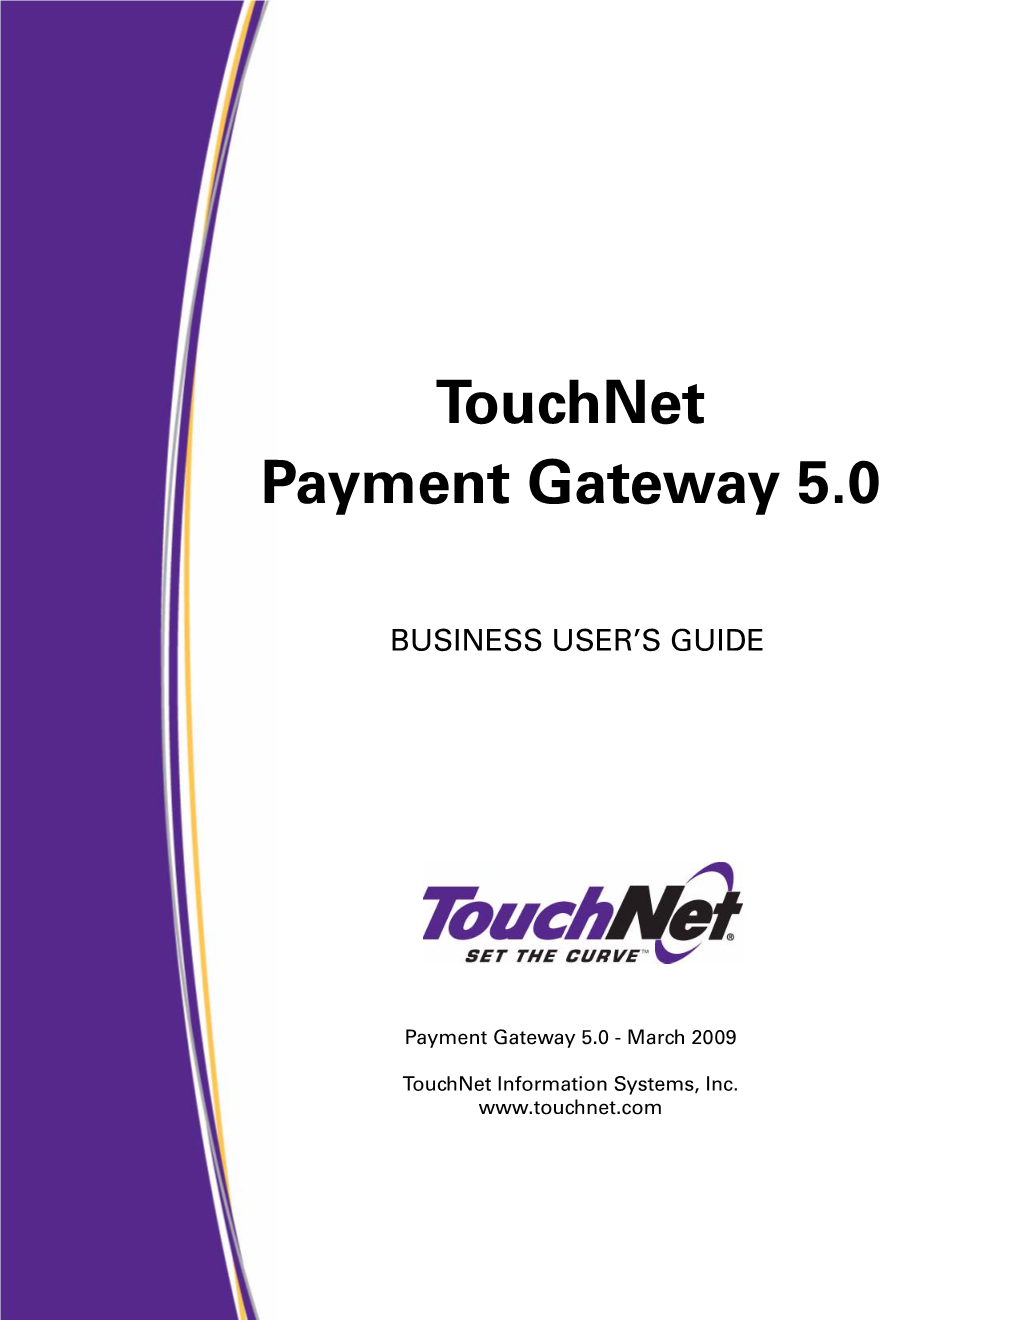 Touchnet Payment Gateway 5.0